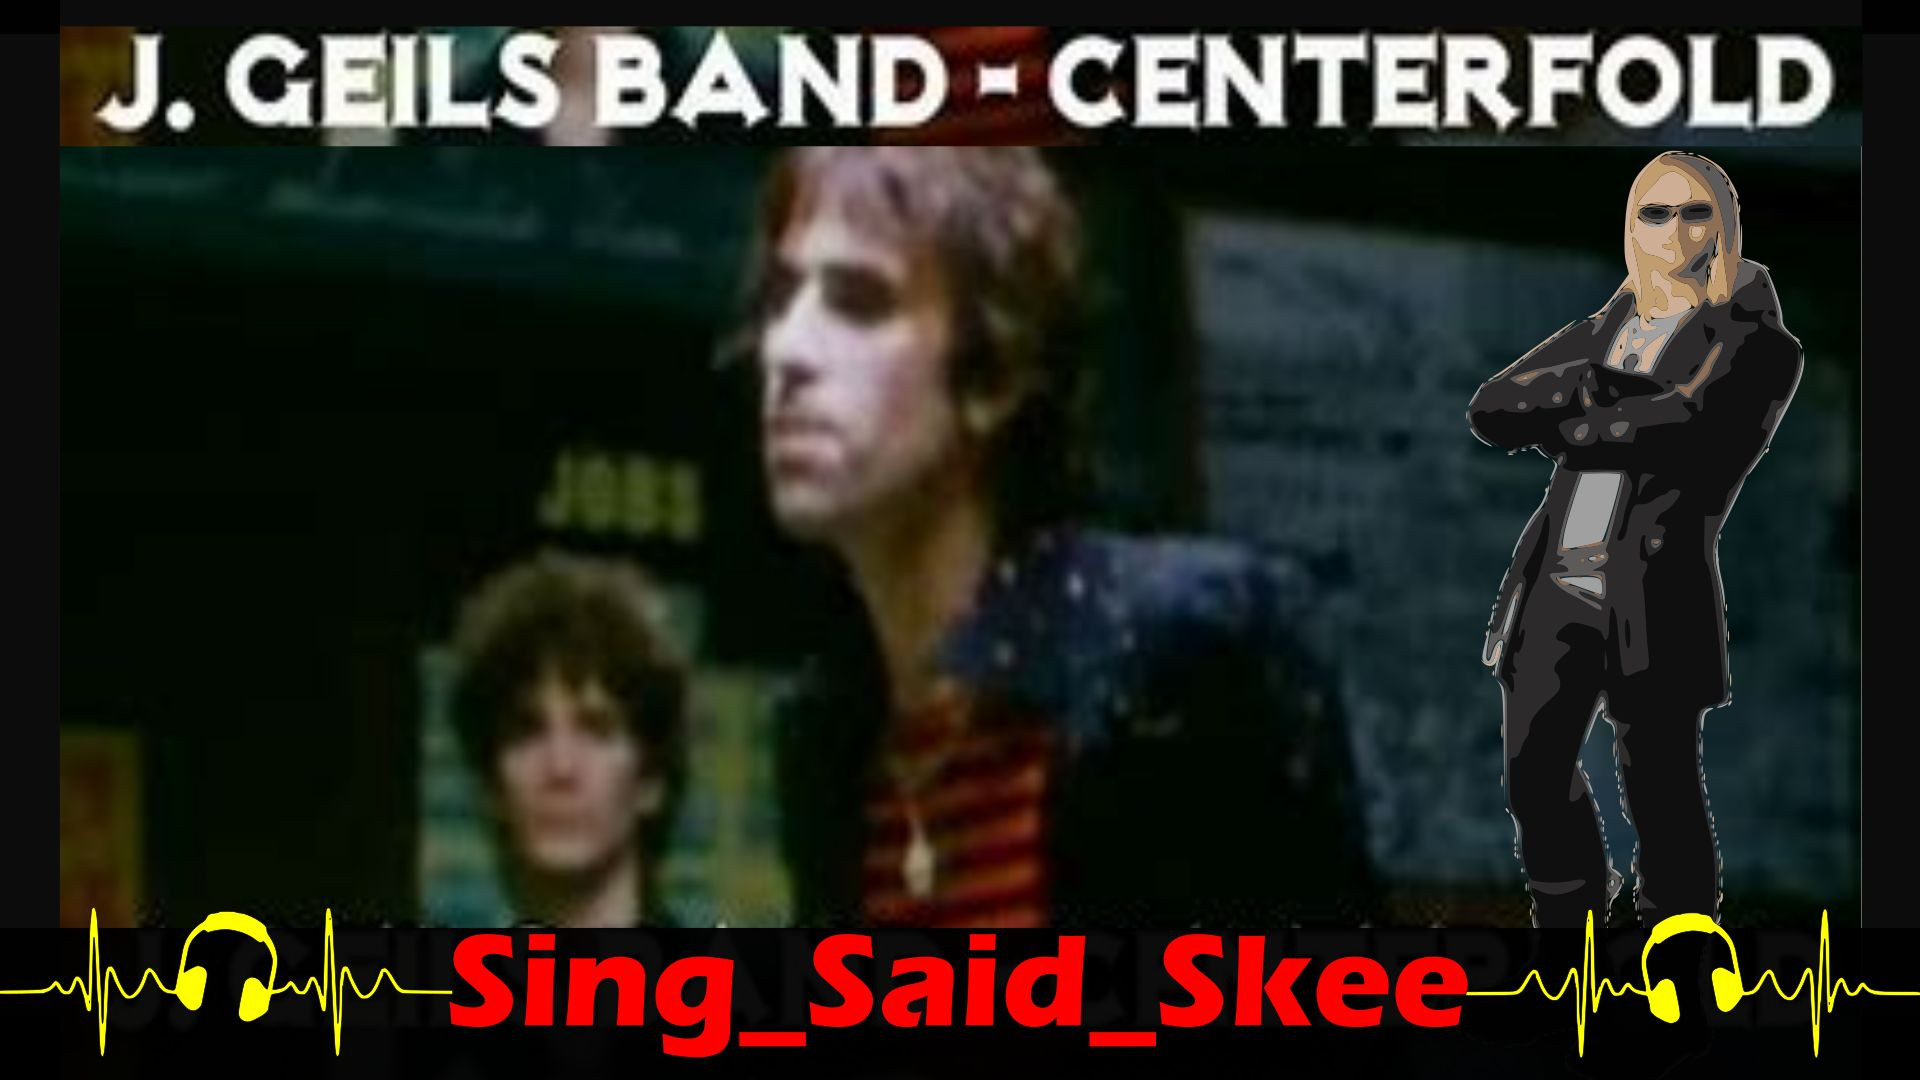 Centerfold - J. Geils Band - Sing_Said_Skee